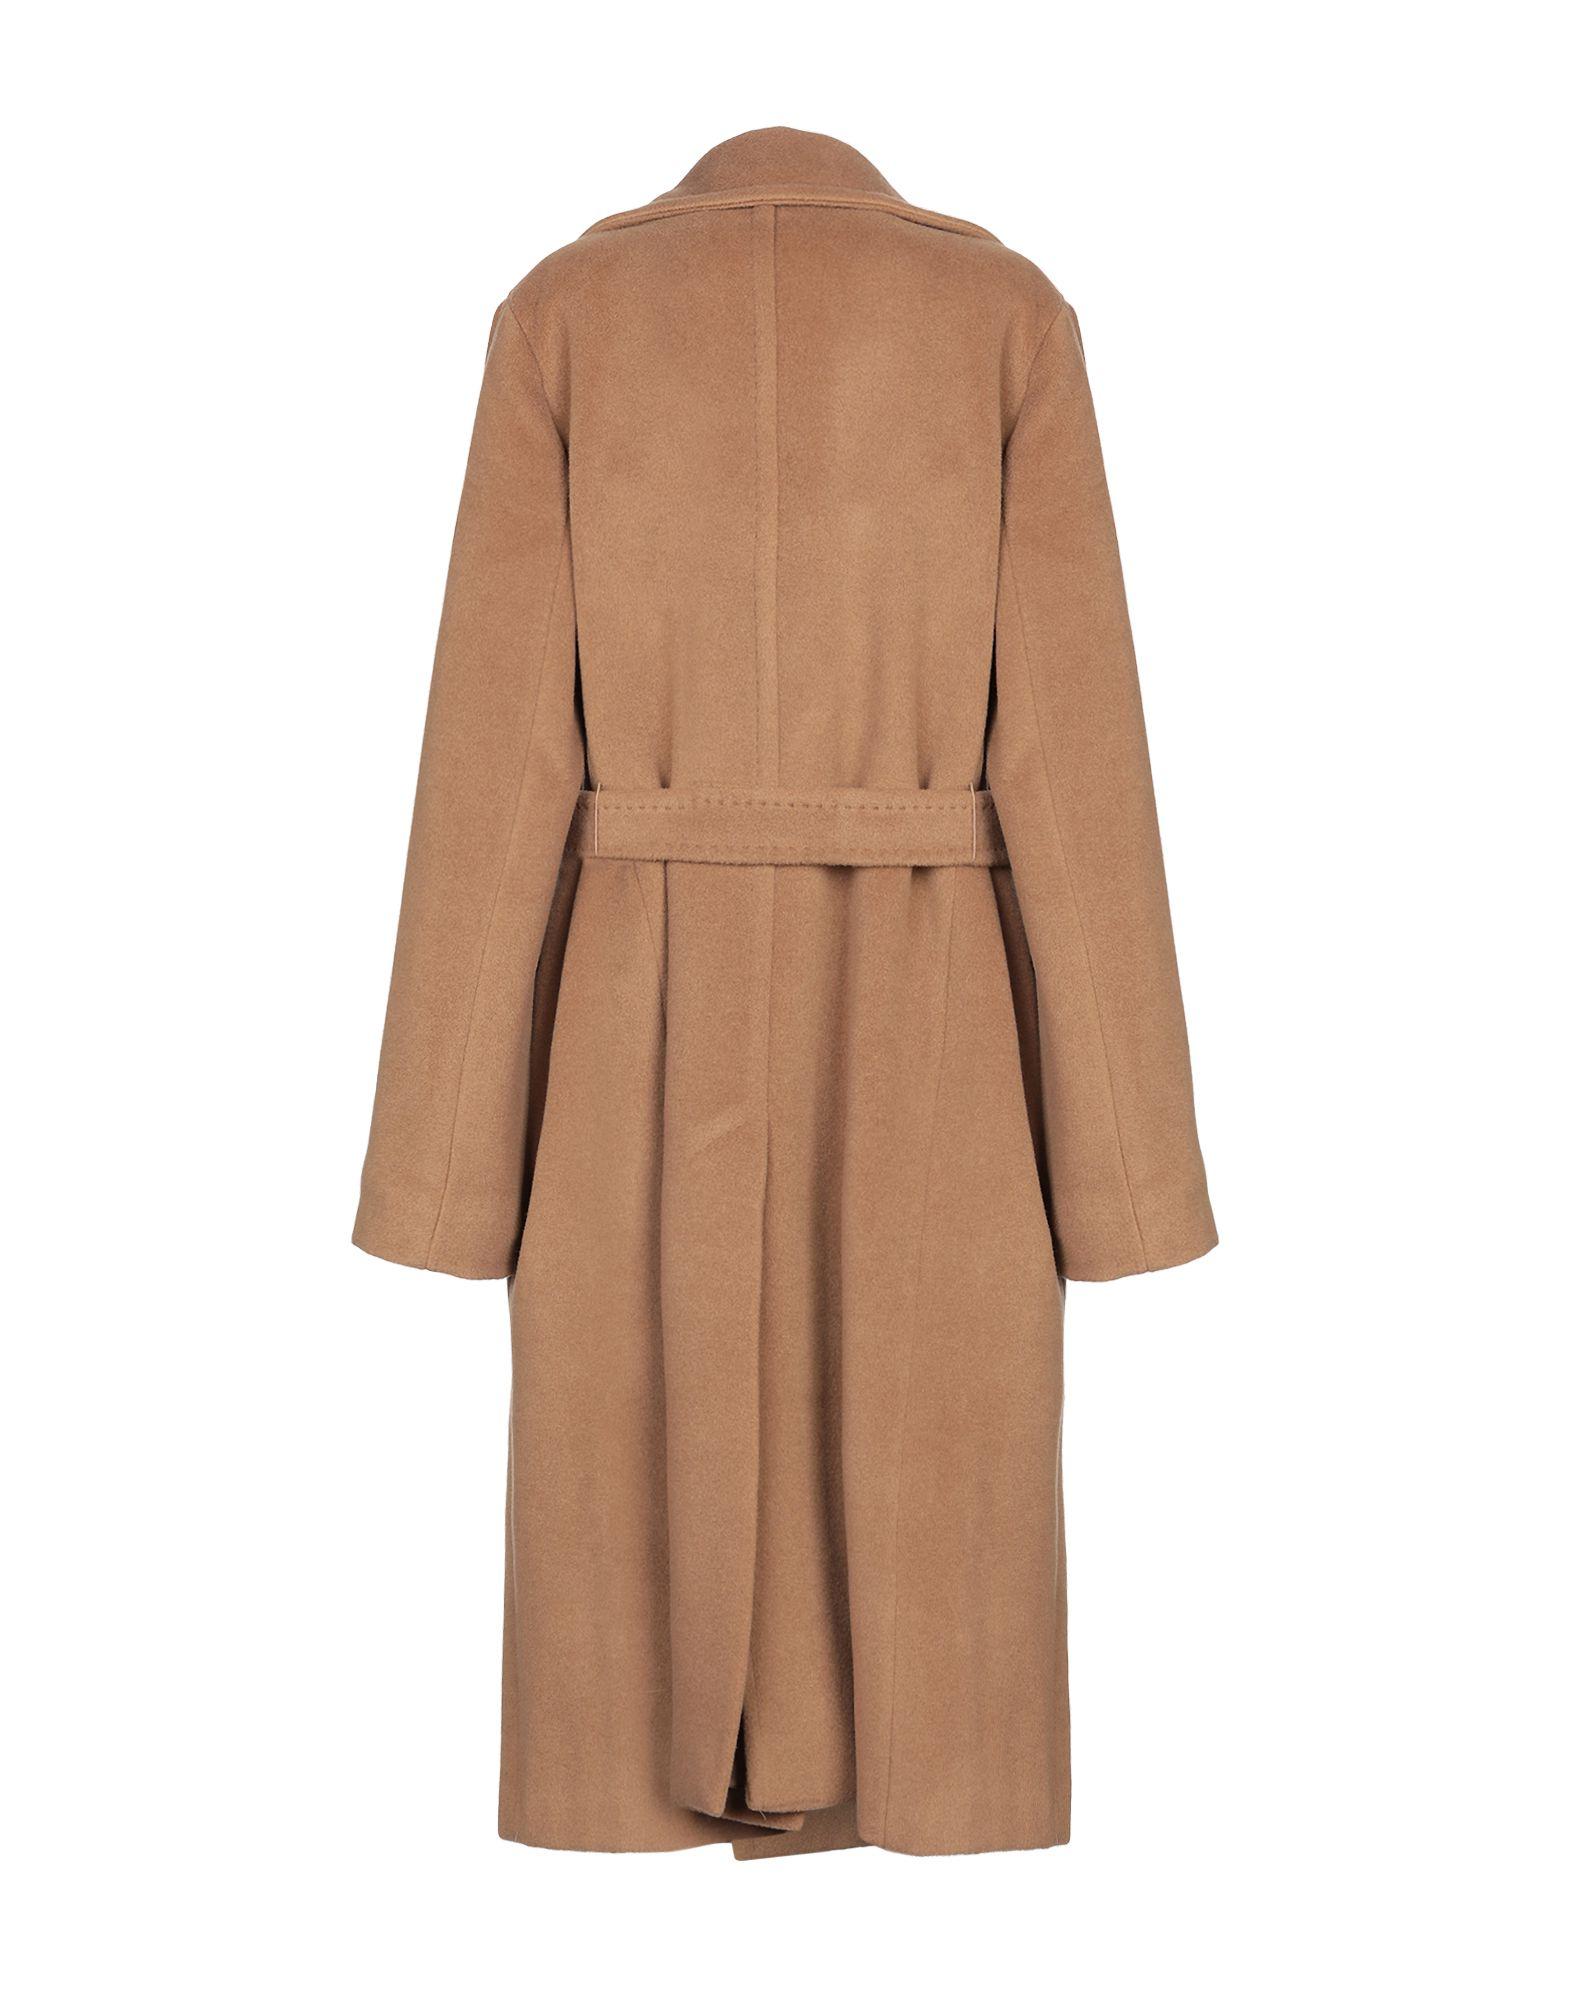 Marella Wool Coat in Camel (Natural) - Lyst